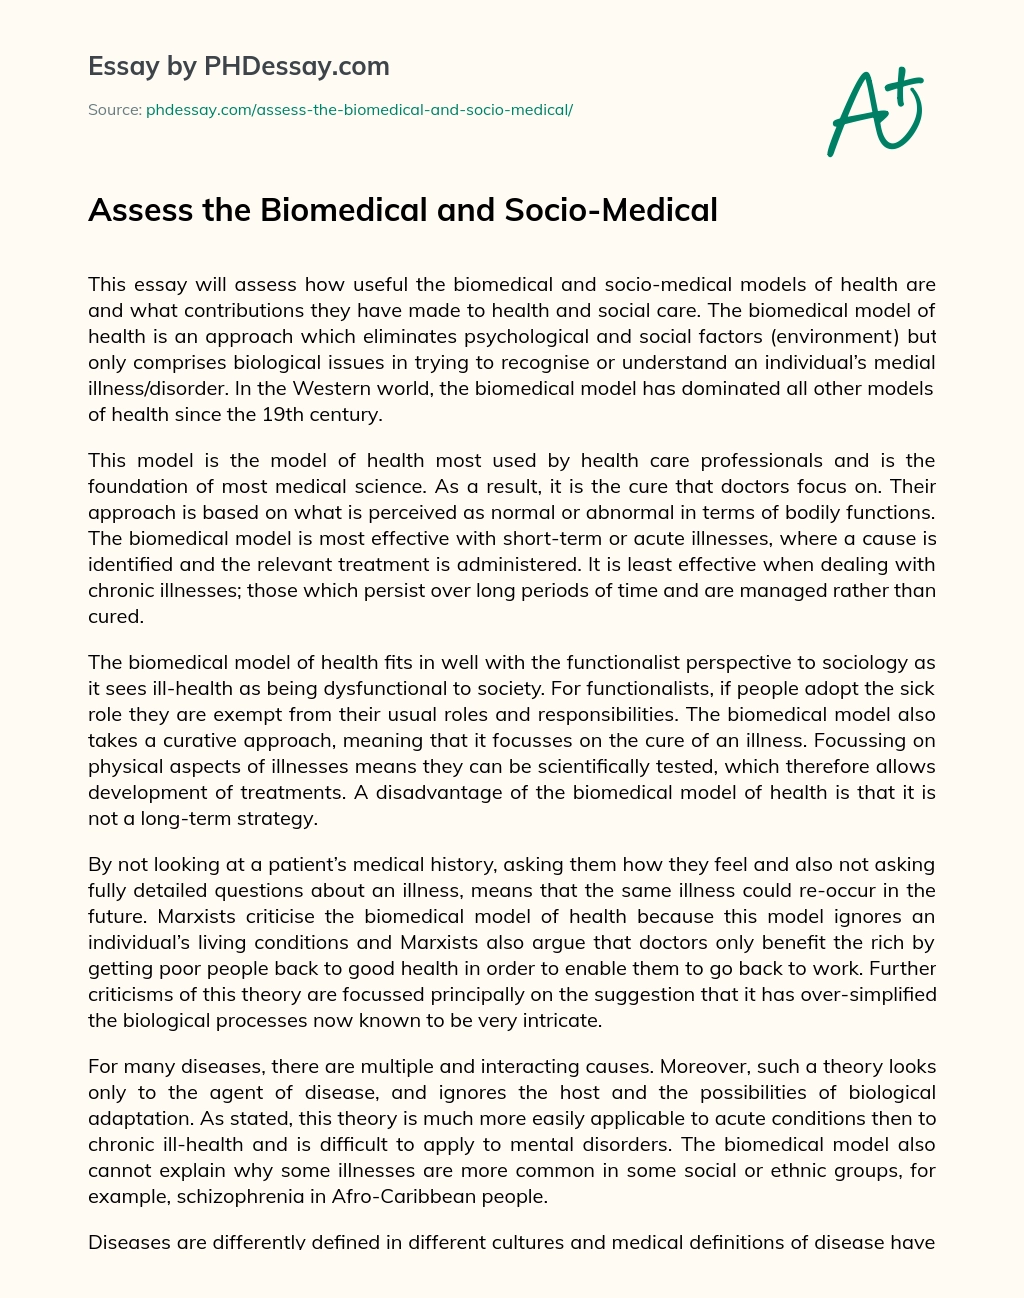 Assess the Biomedical and Socio-Medical essay